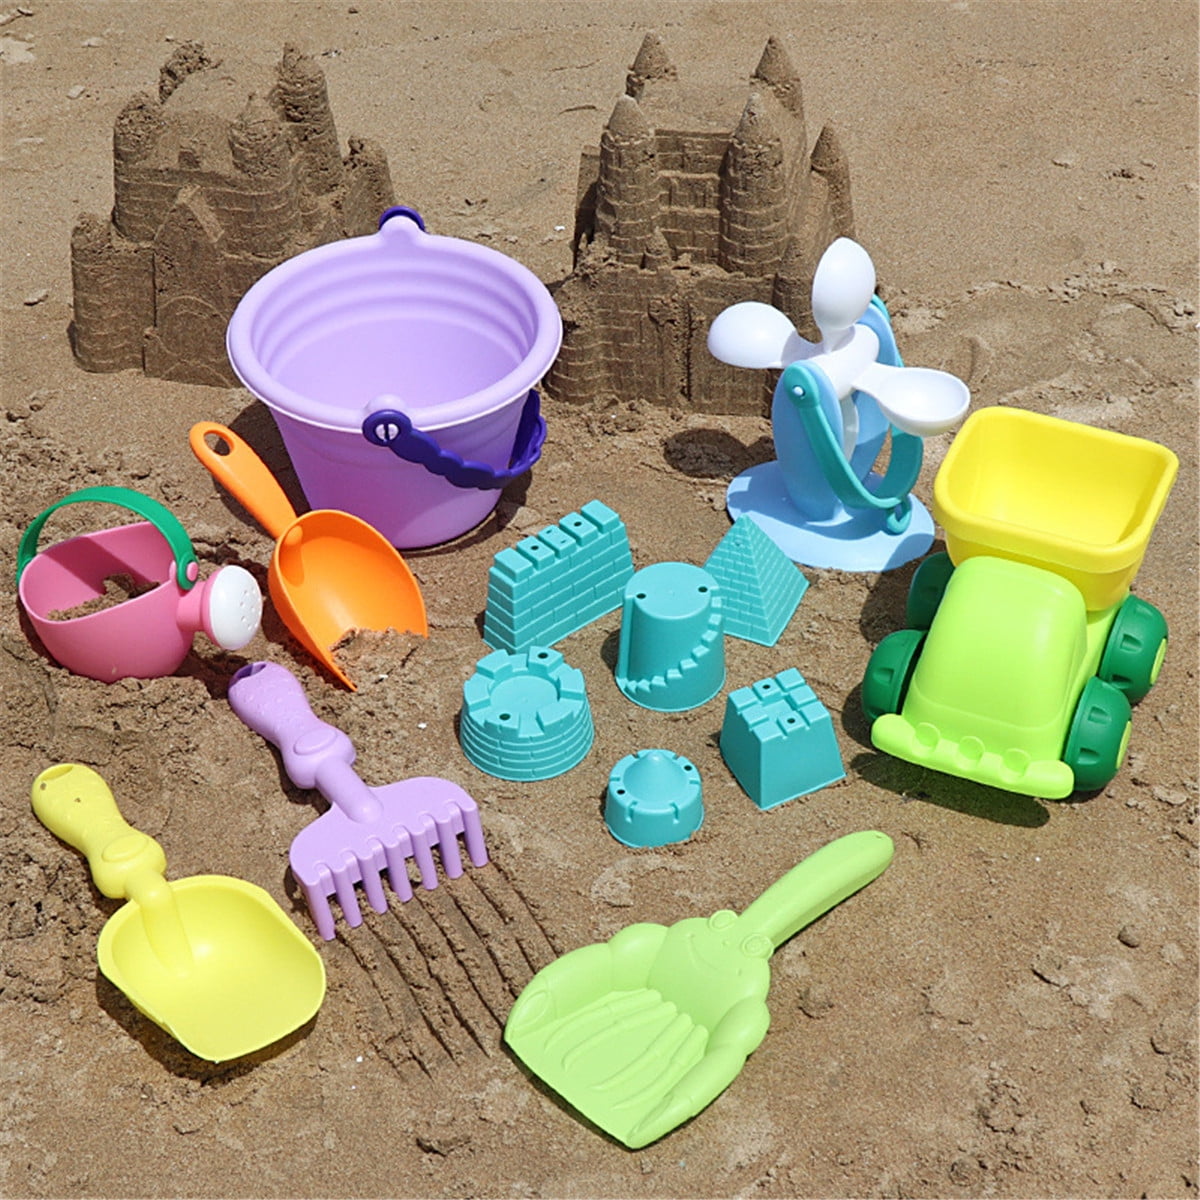  Toysmith, Bag O'Beach Bones Playset, 14 Life-Size Bone Sand  Molds, For Boys & Girls Ages 3+ : Toys & Games